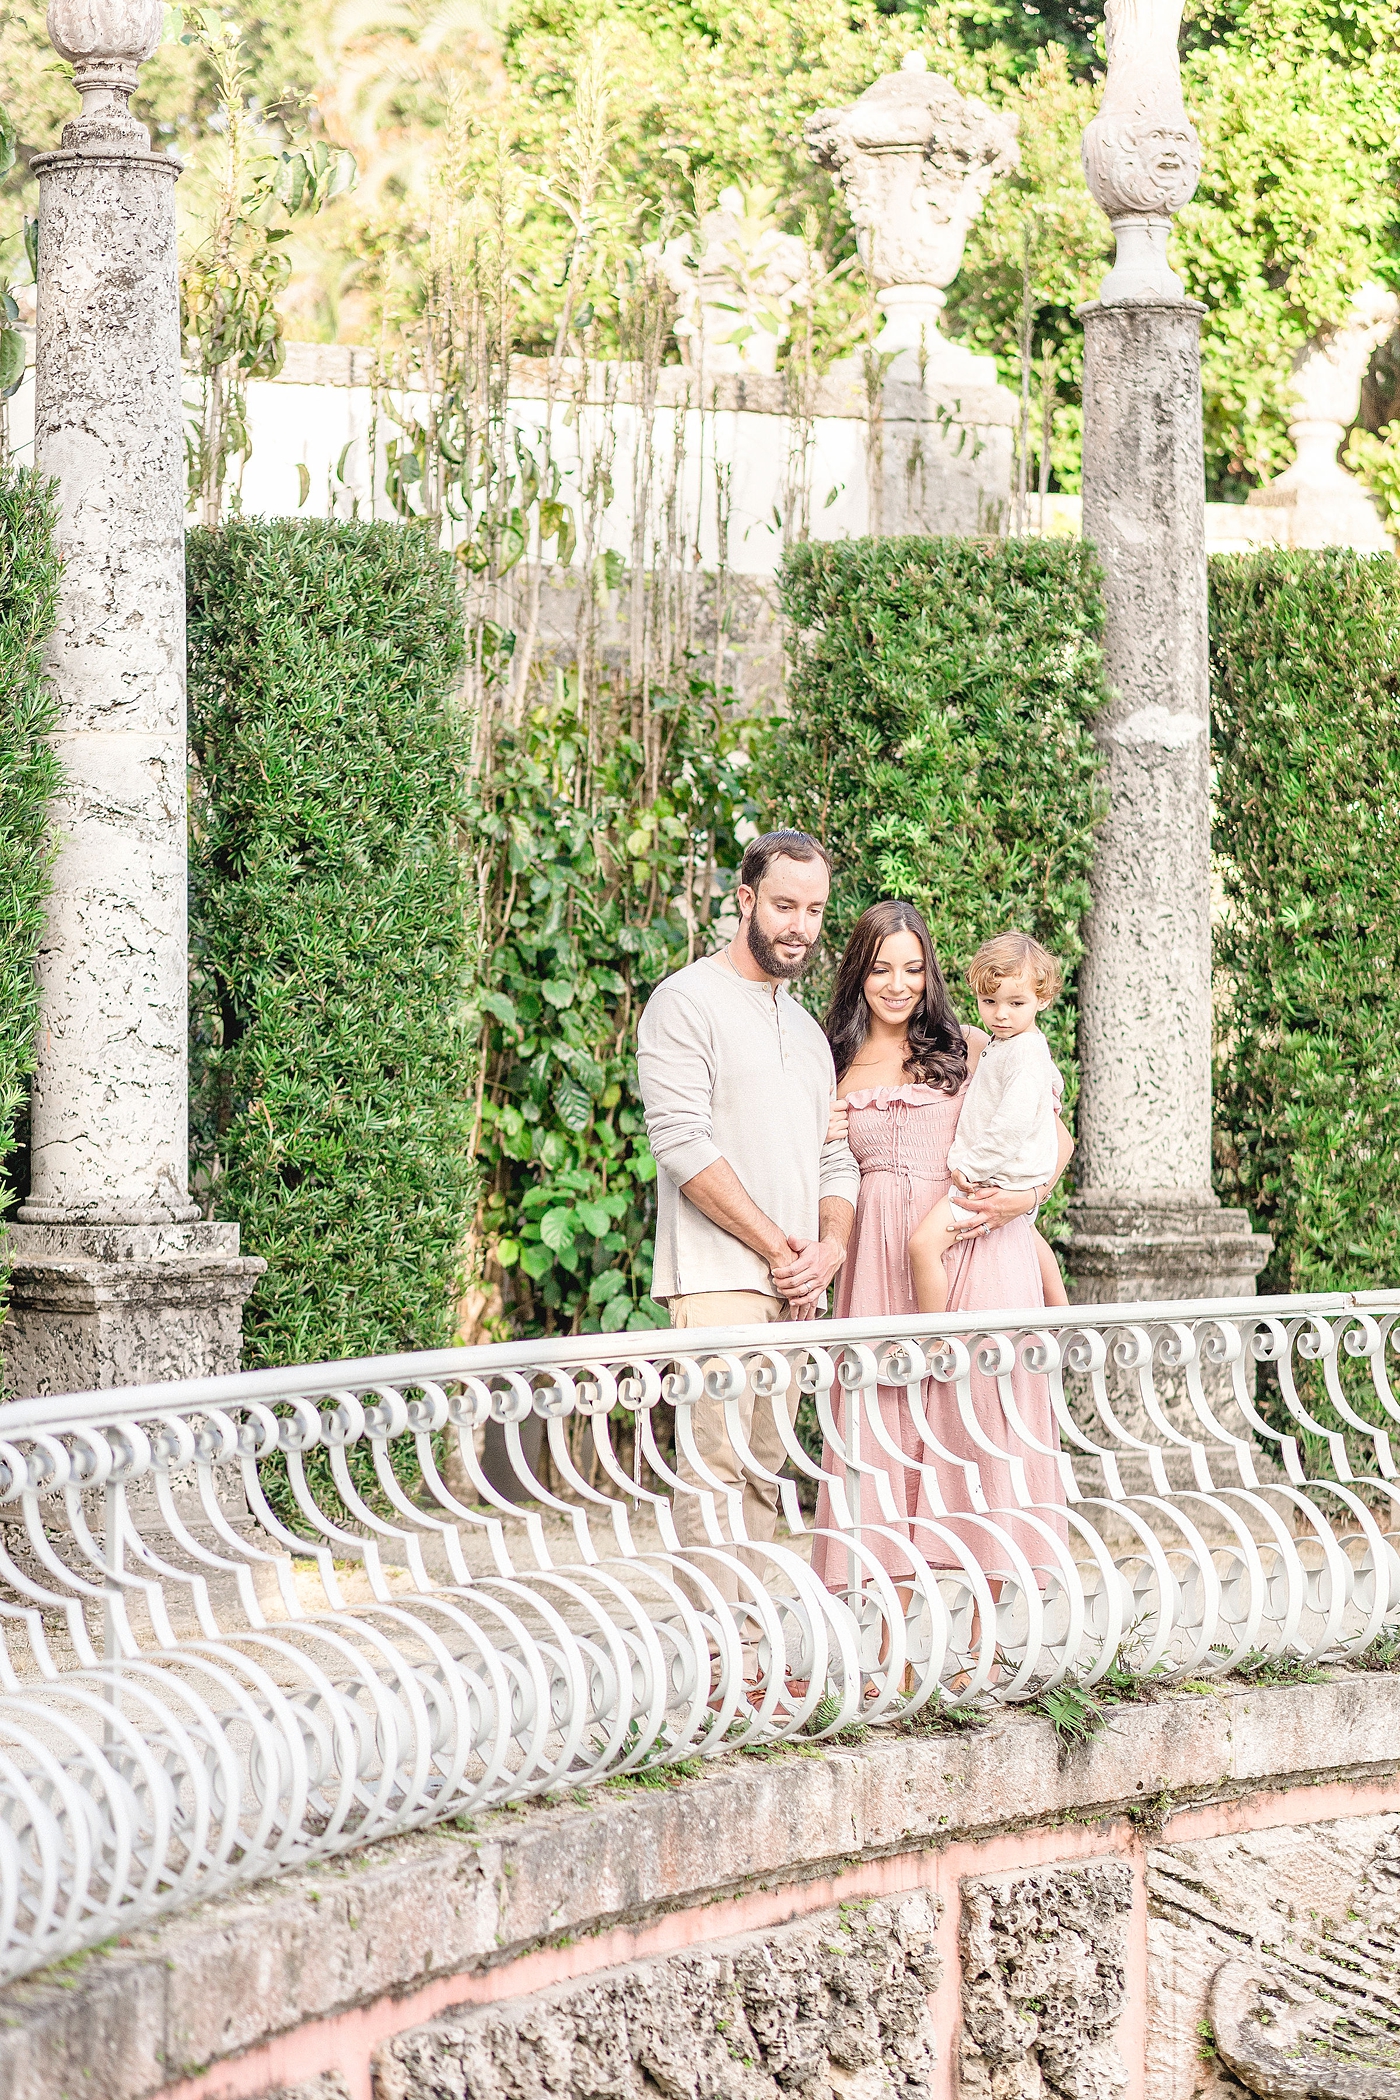 Miami family photoshoot looking at the gardens of Vizcaya. Photo by Ivanna Vidal Photography.